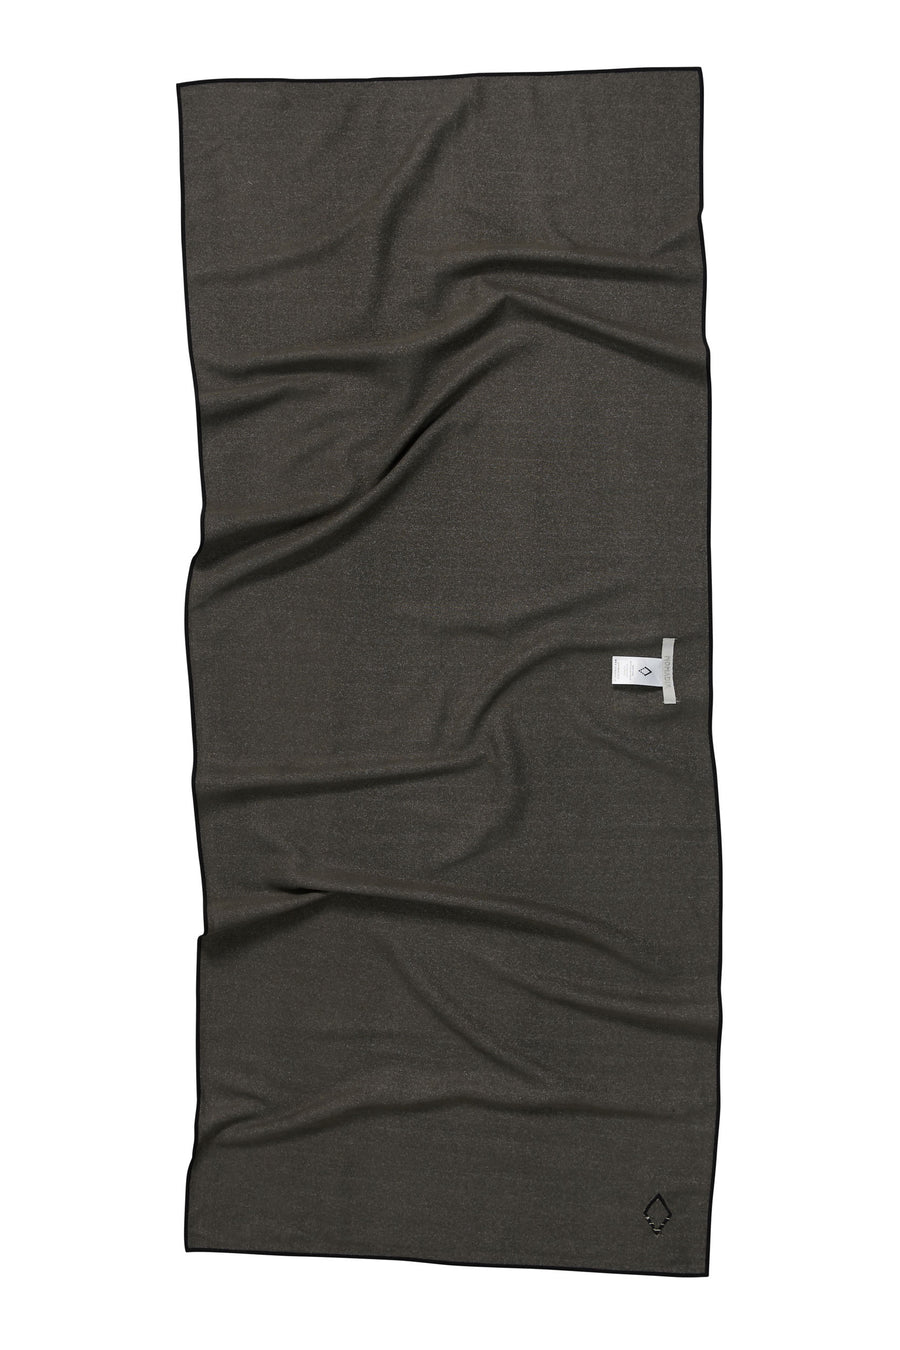 Original Towel: Tie Dye Black and White